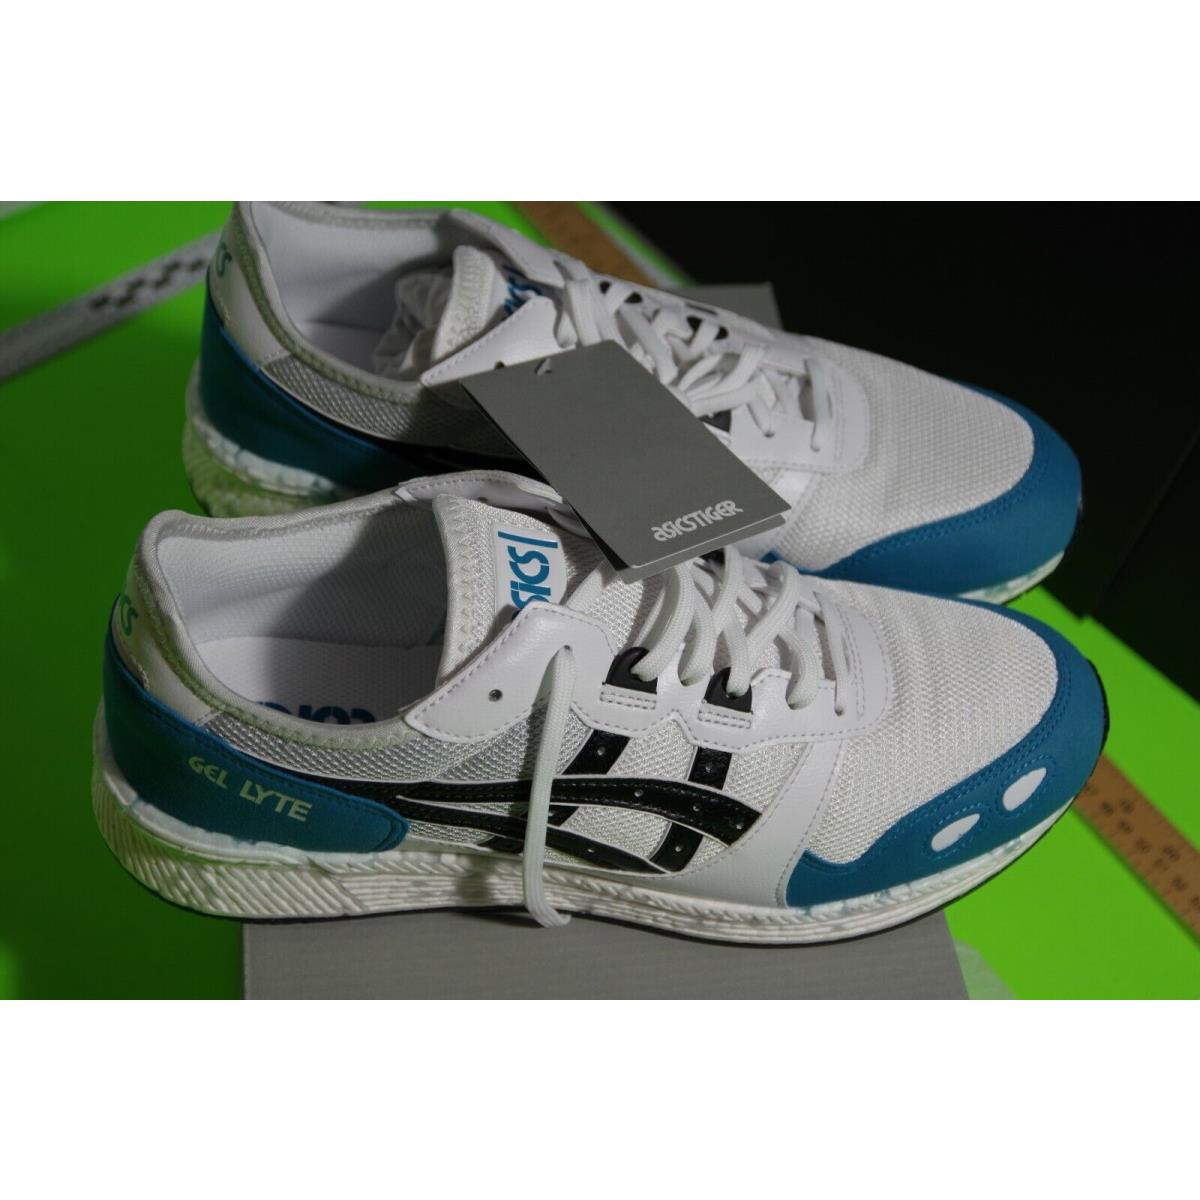 W/box Mens Shoes - Asics Hyper Gel Lyte - Size 11 Mens White/teal